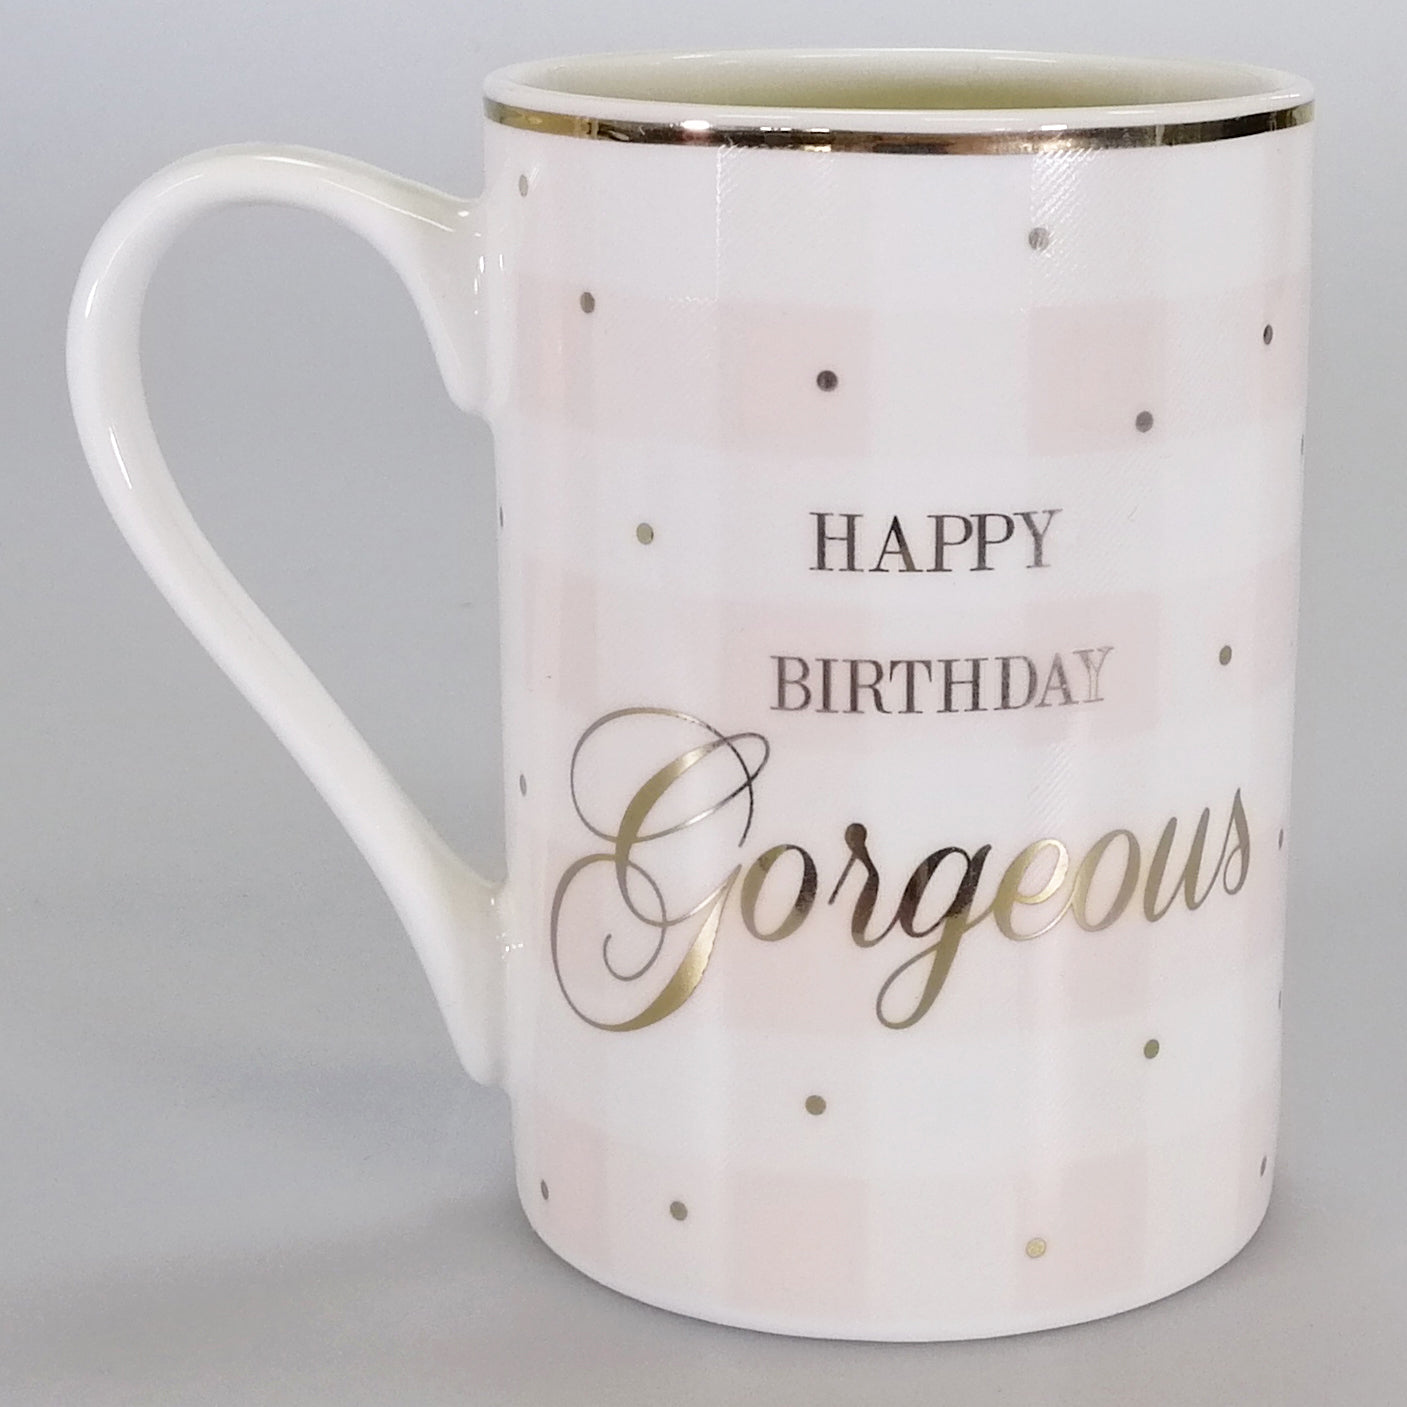 Happy birthdays Gorgeous' Mug